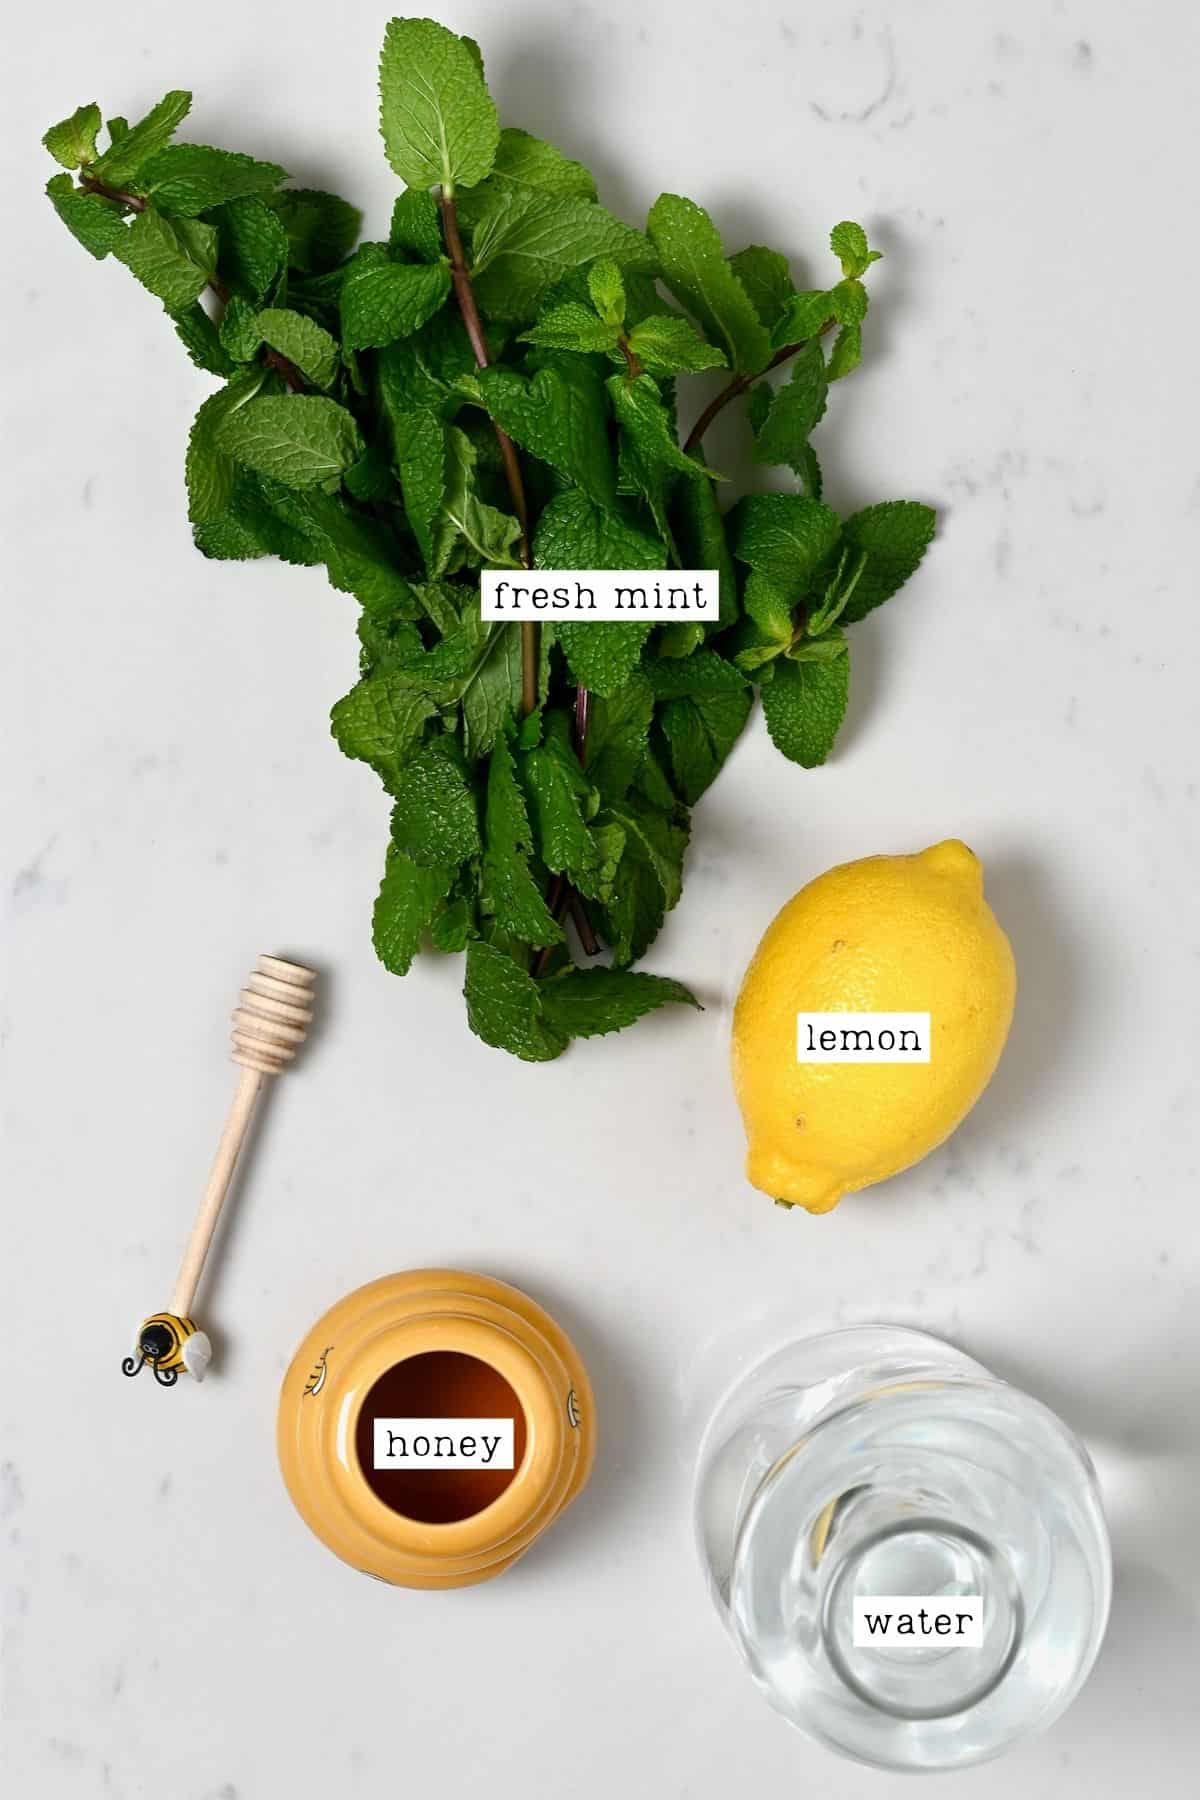 Ingredients for fresh mint tea